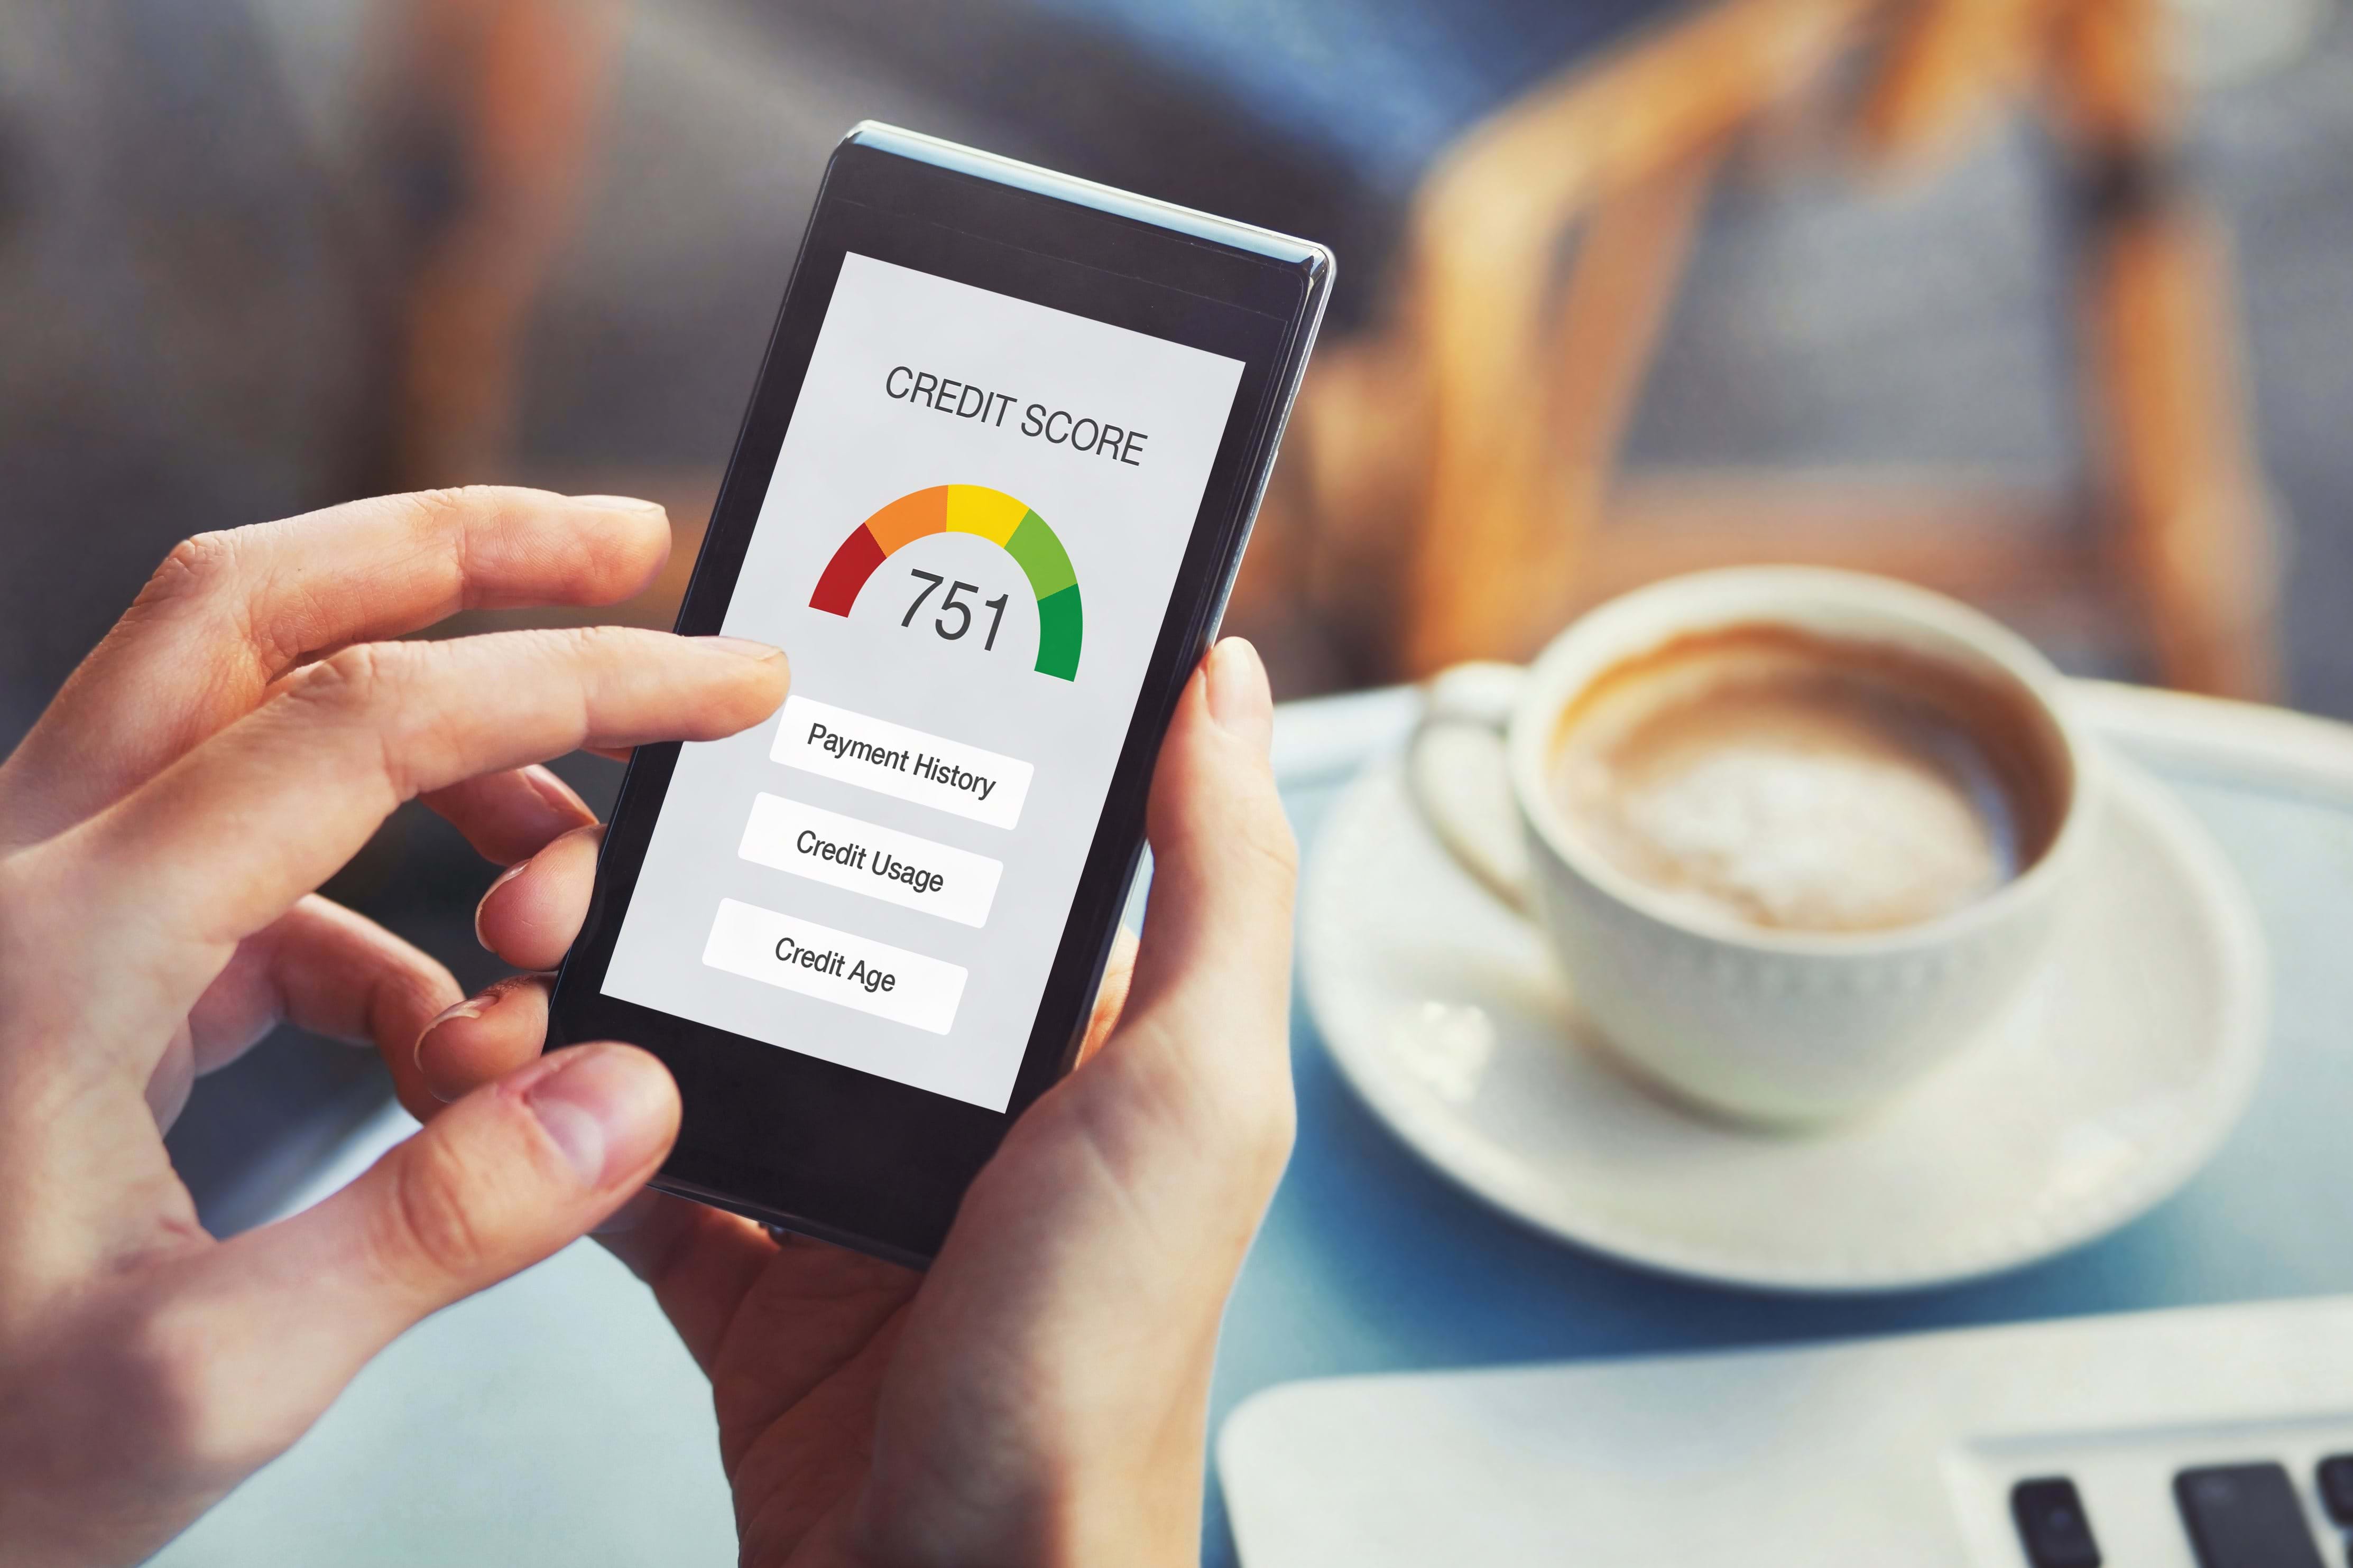 credit score platform on smartphone screen